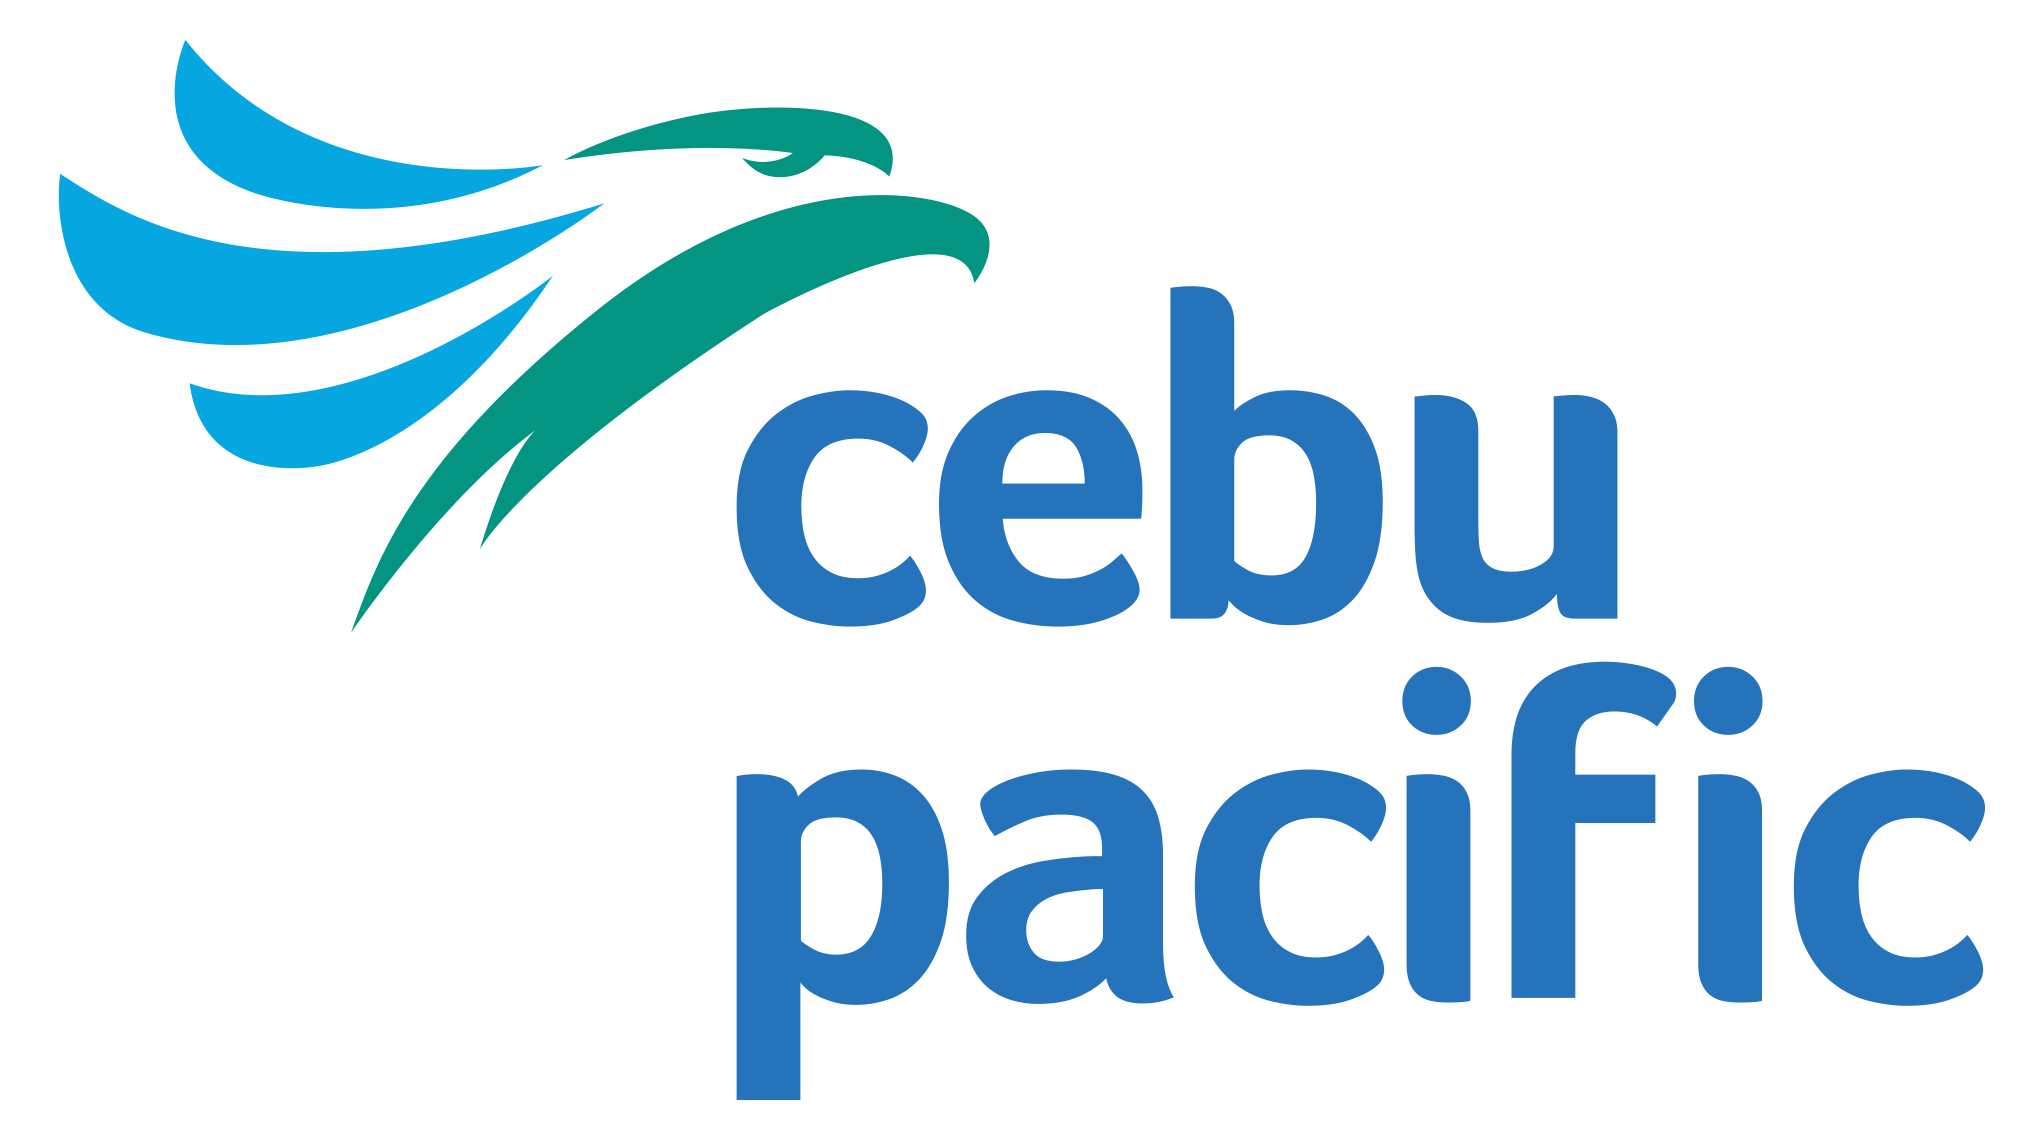 Cebu pacific png 6 PNG Image